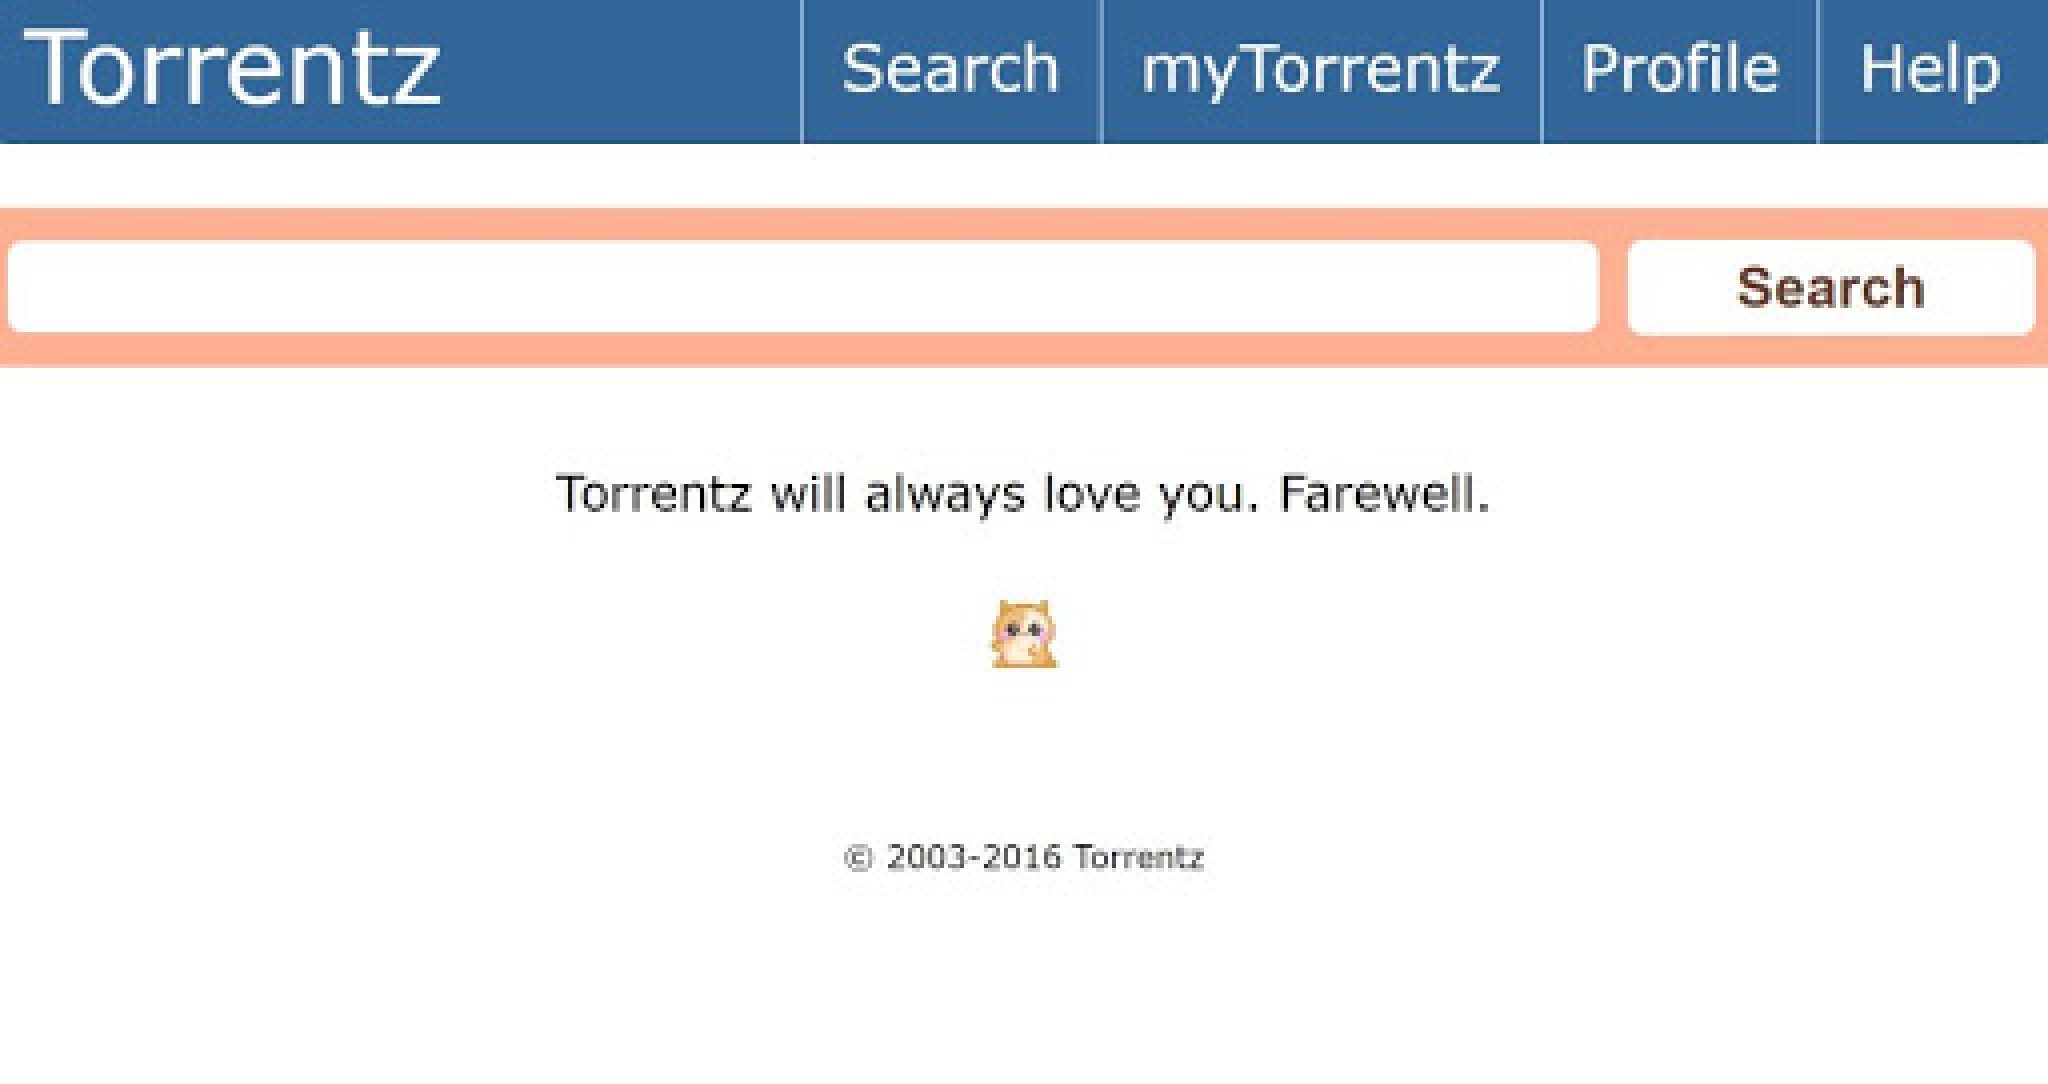 torrentz2 search